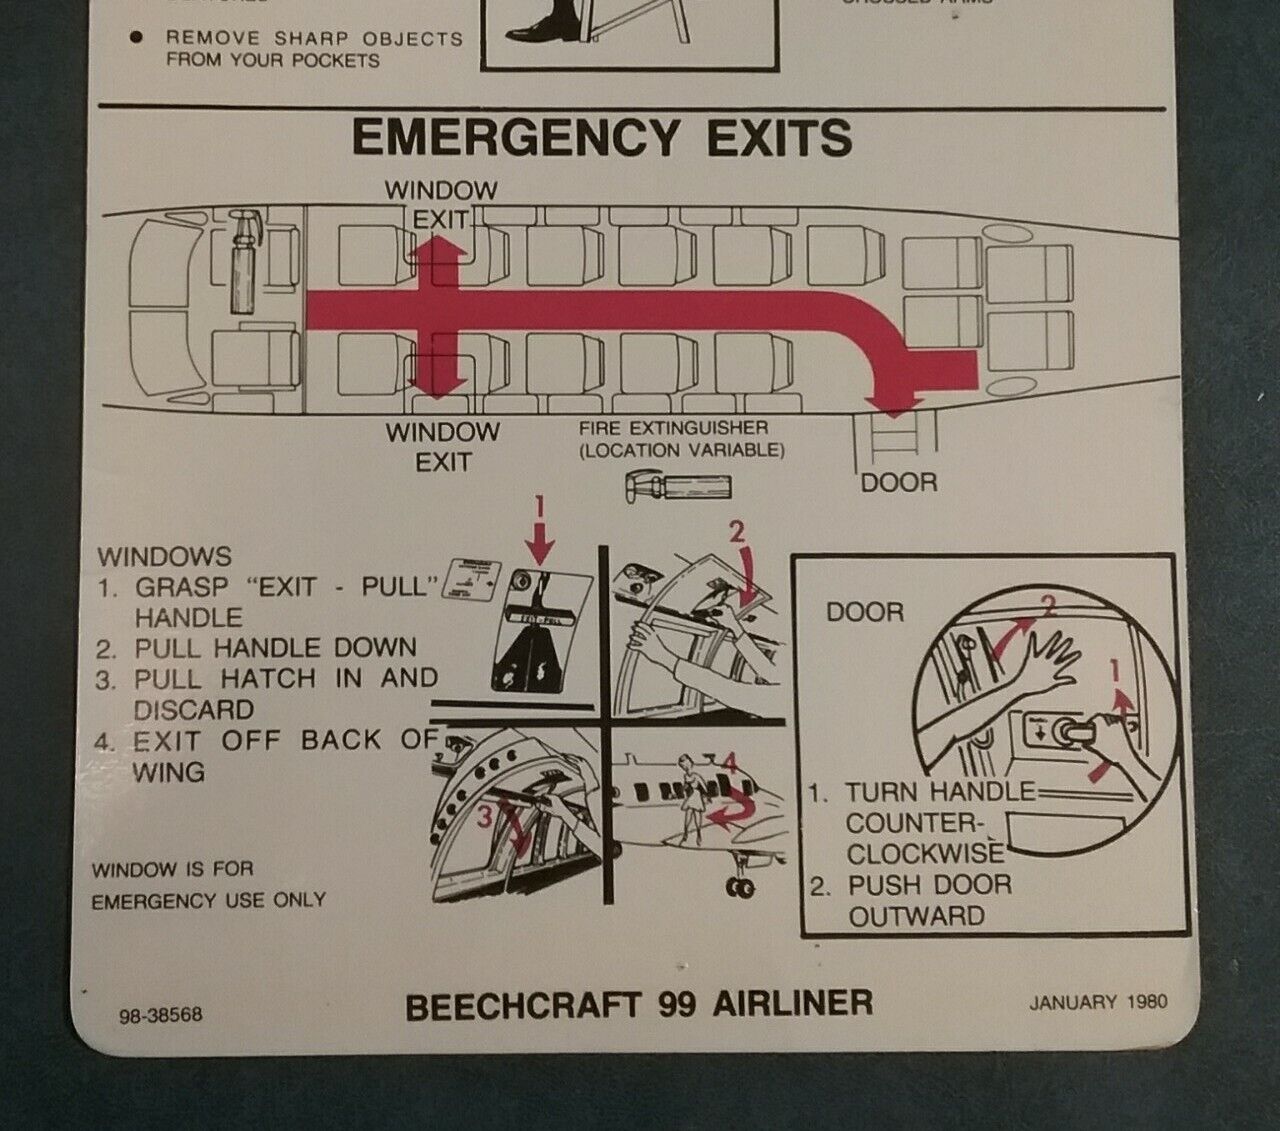 BEECHCRAFT 99 AIRLINER Flight Safety & Emergency Information Card January 1980